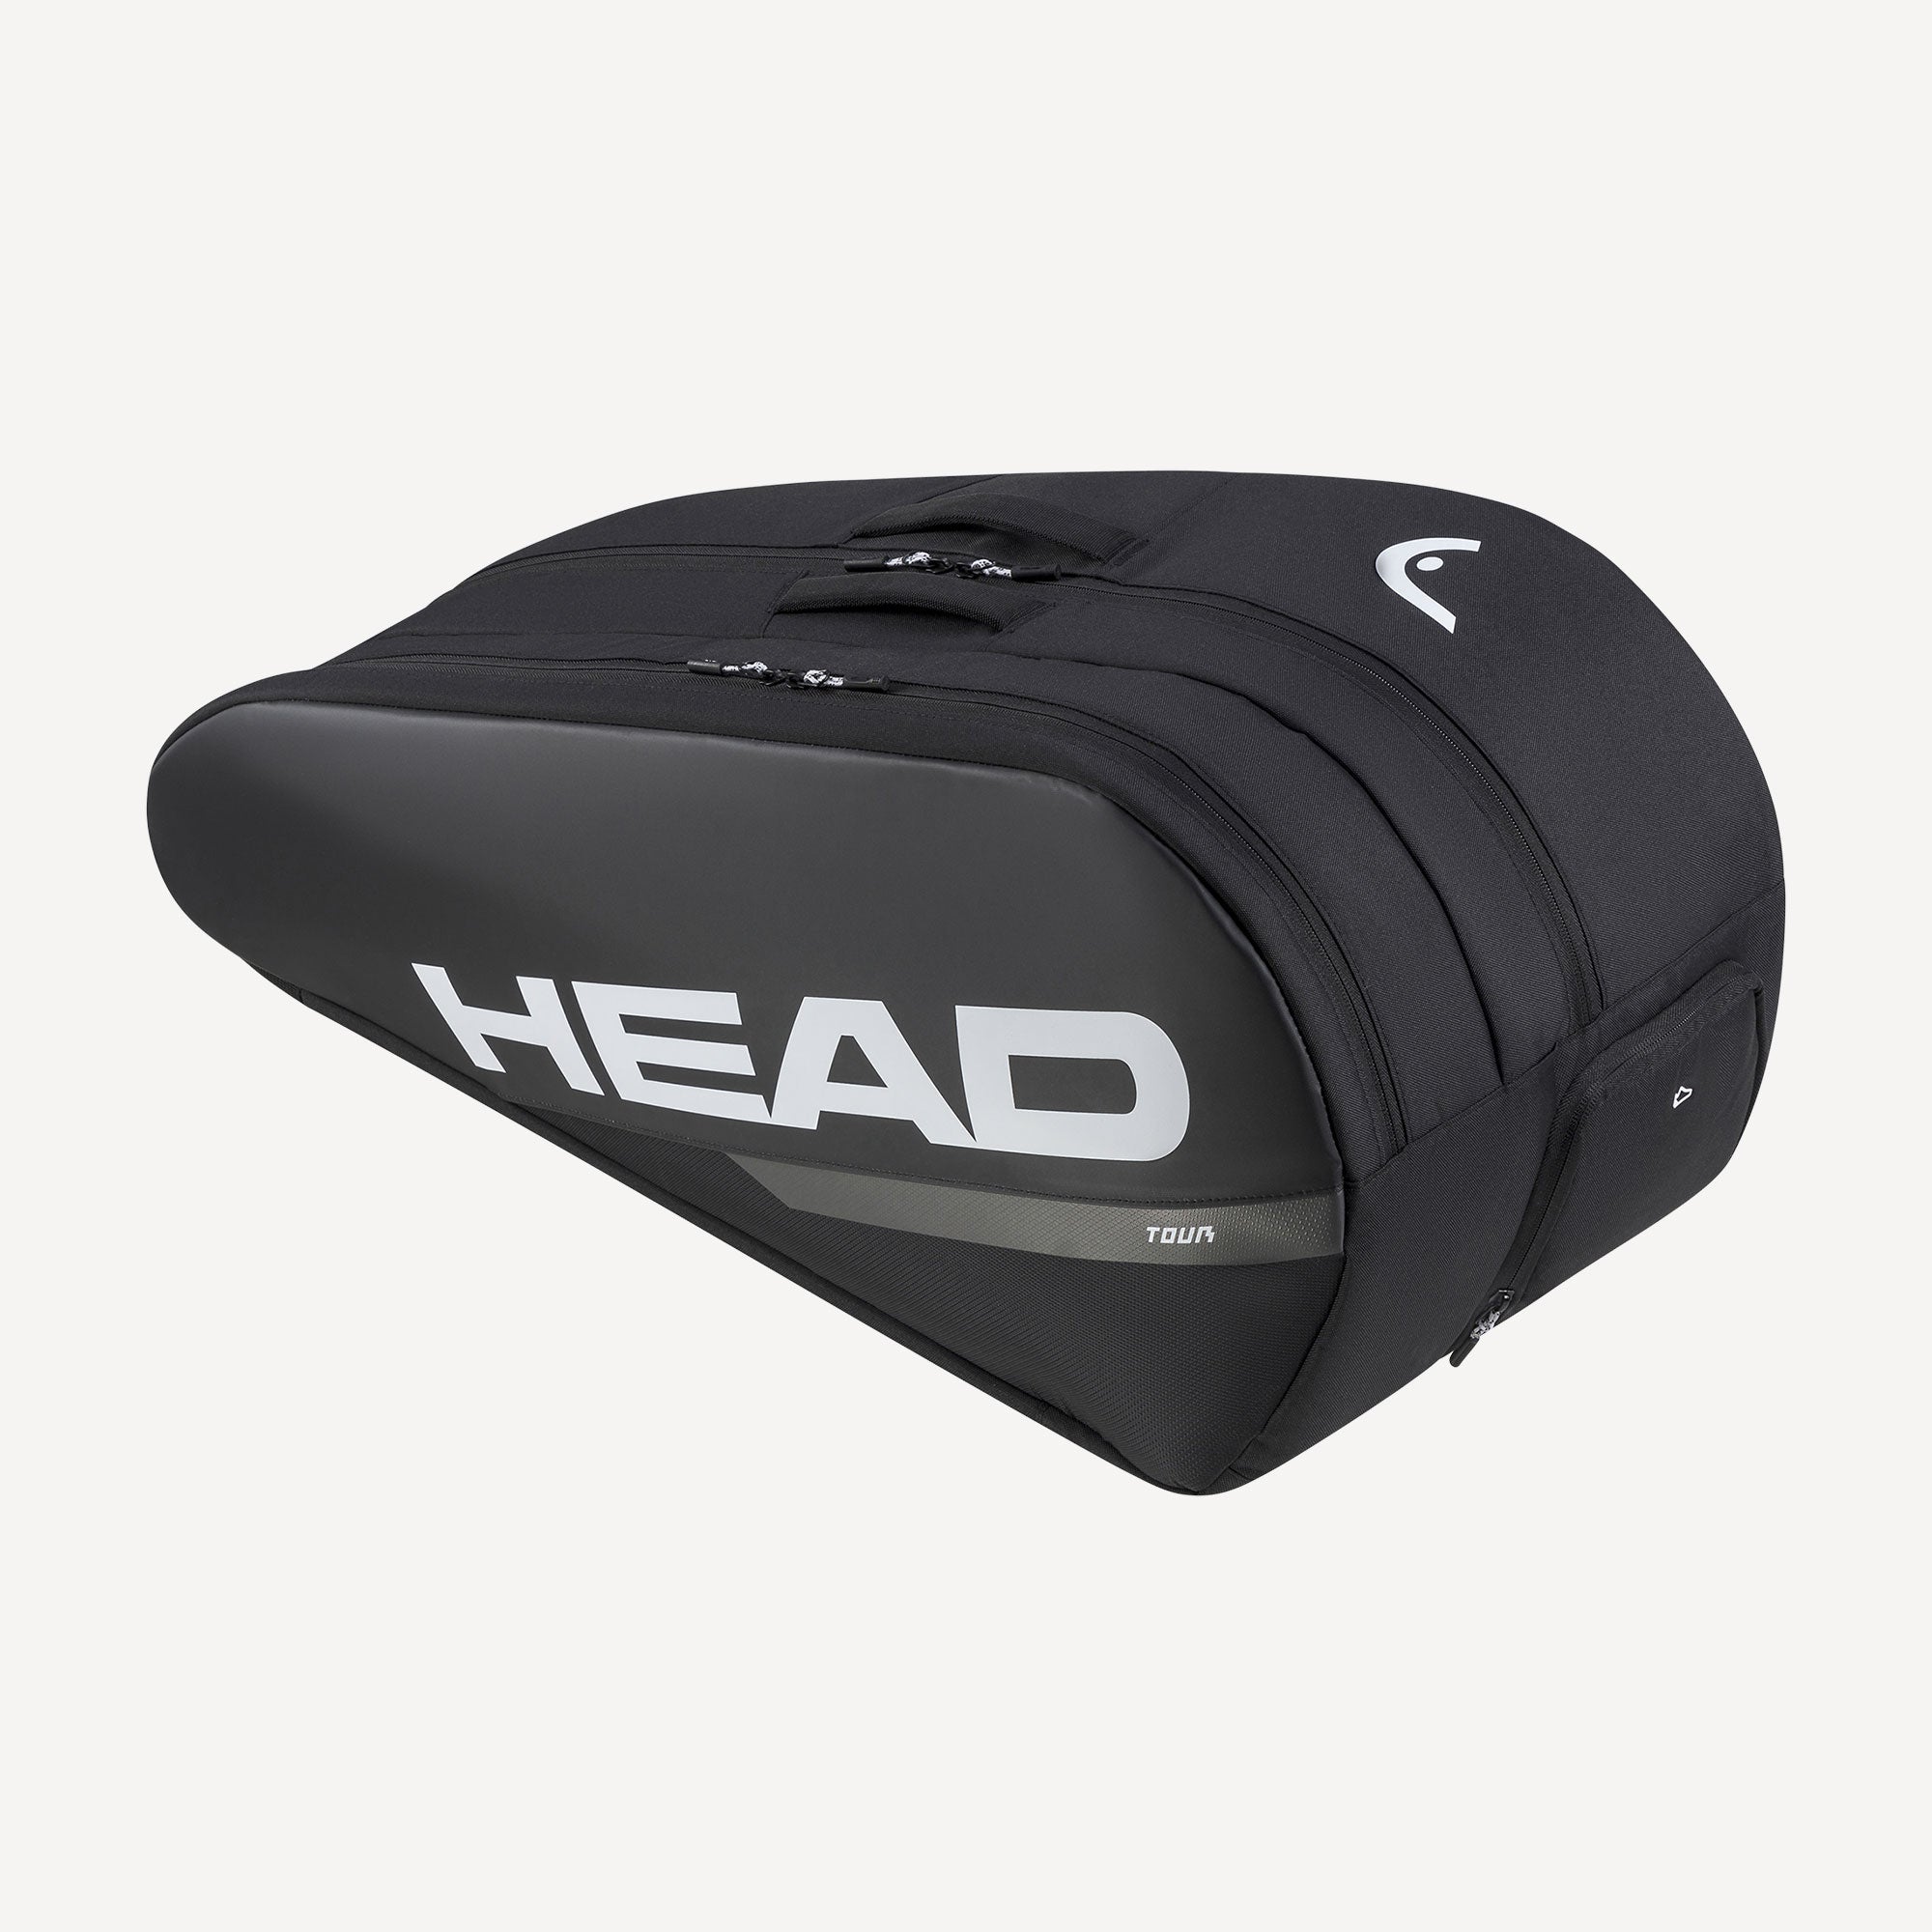 HEAD Tour Racket Tennis Bag L - Black (1)HEAD Tour Racket Tennis Bag L - Black (1)